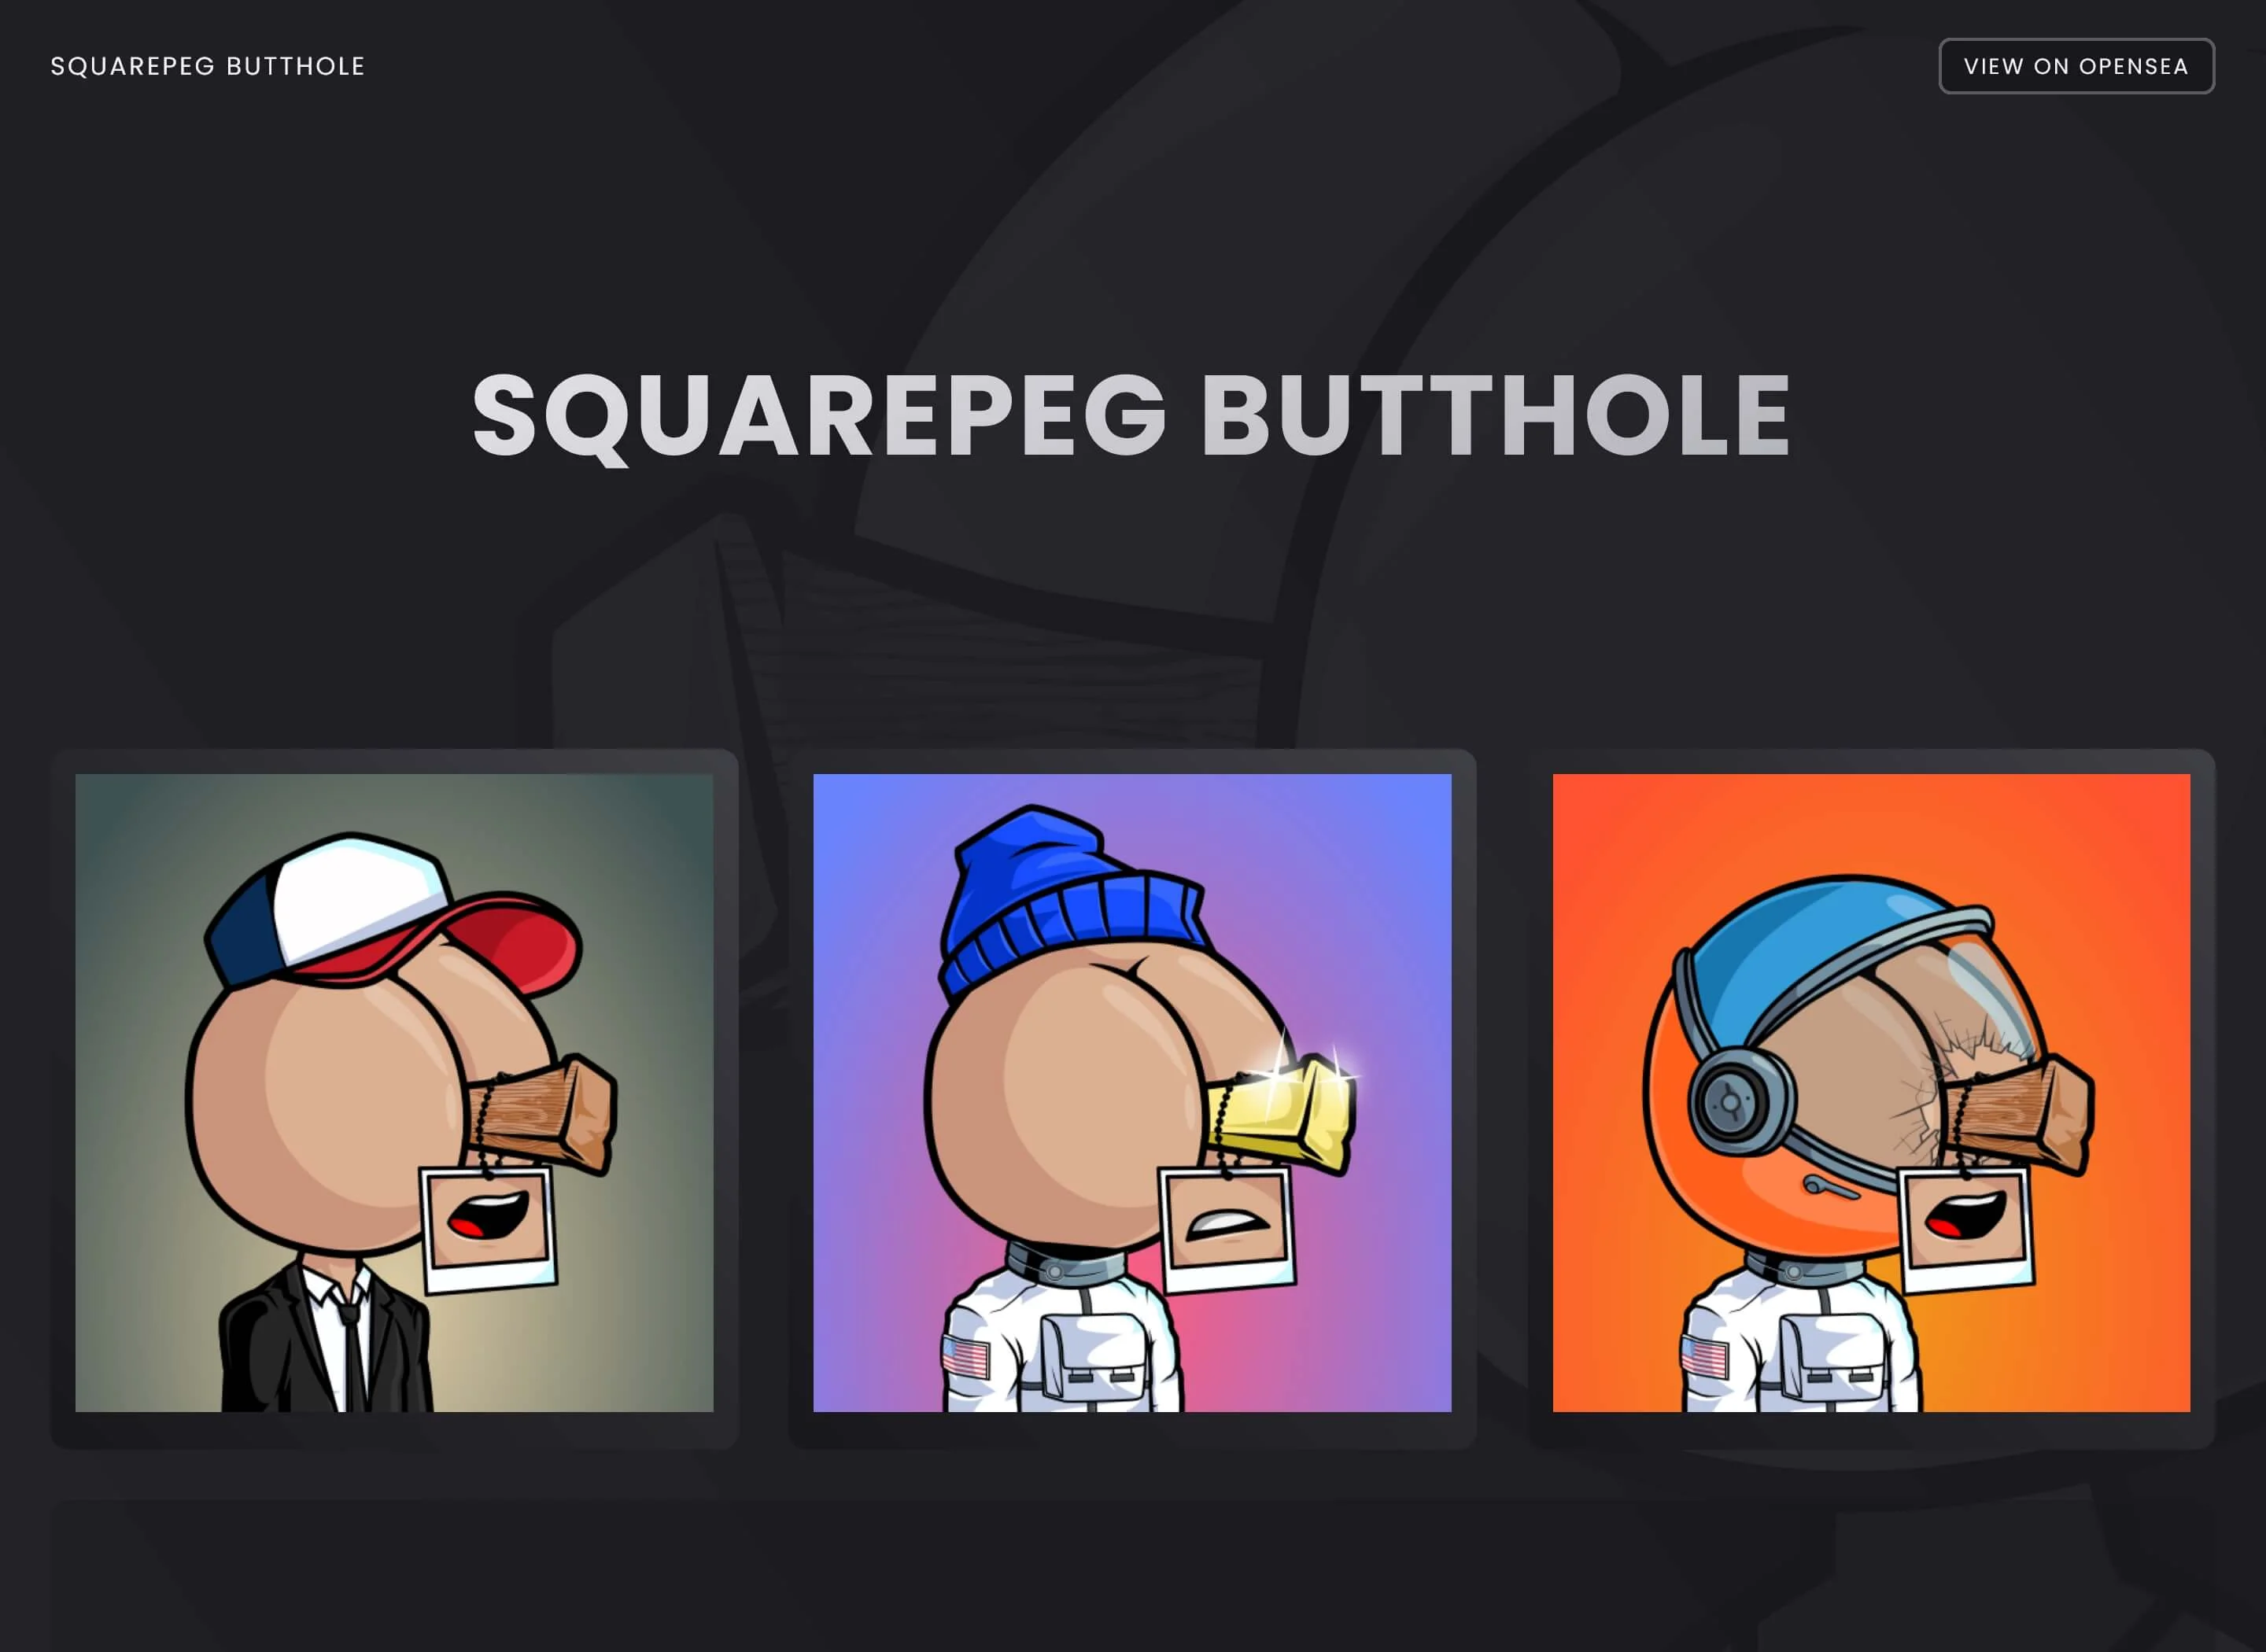 Squarepeg Butthole screenshot